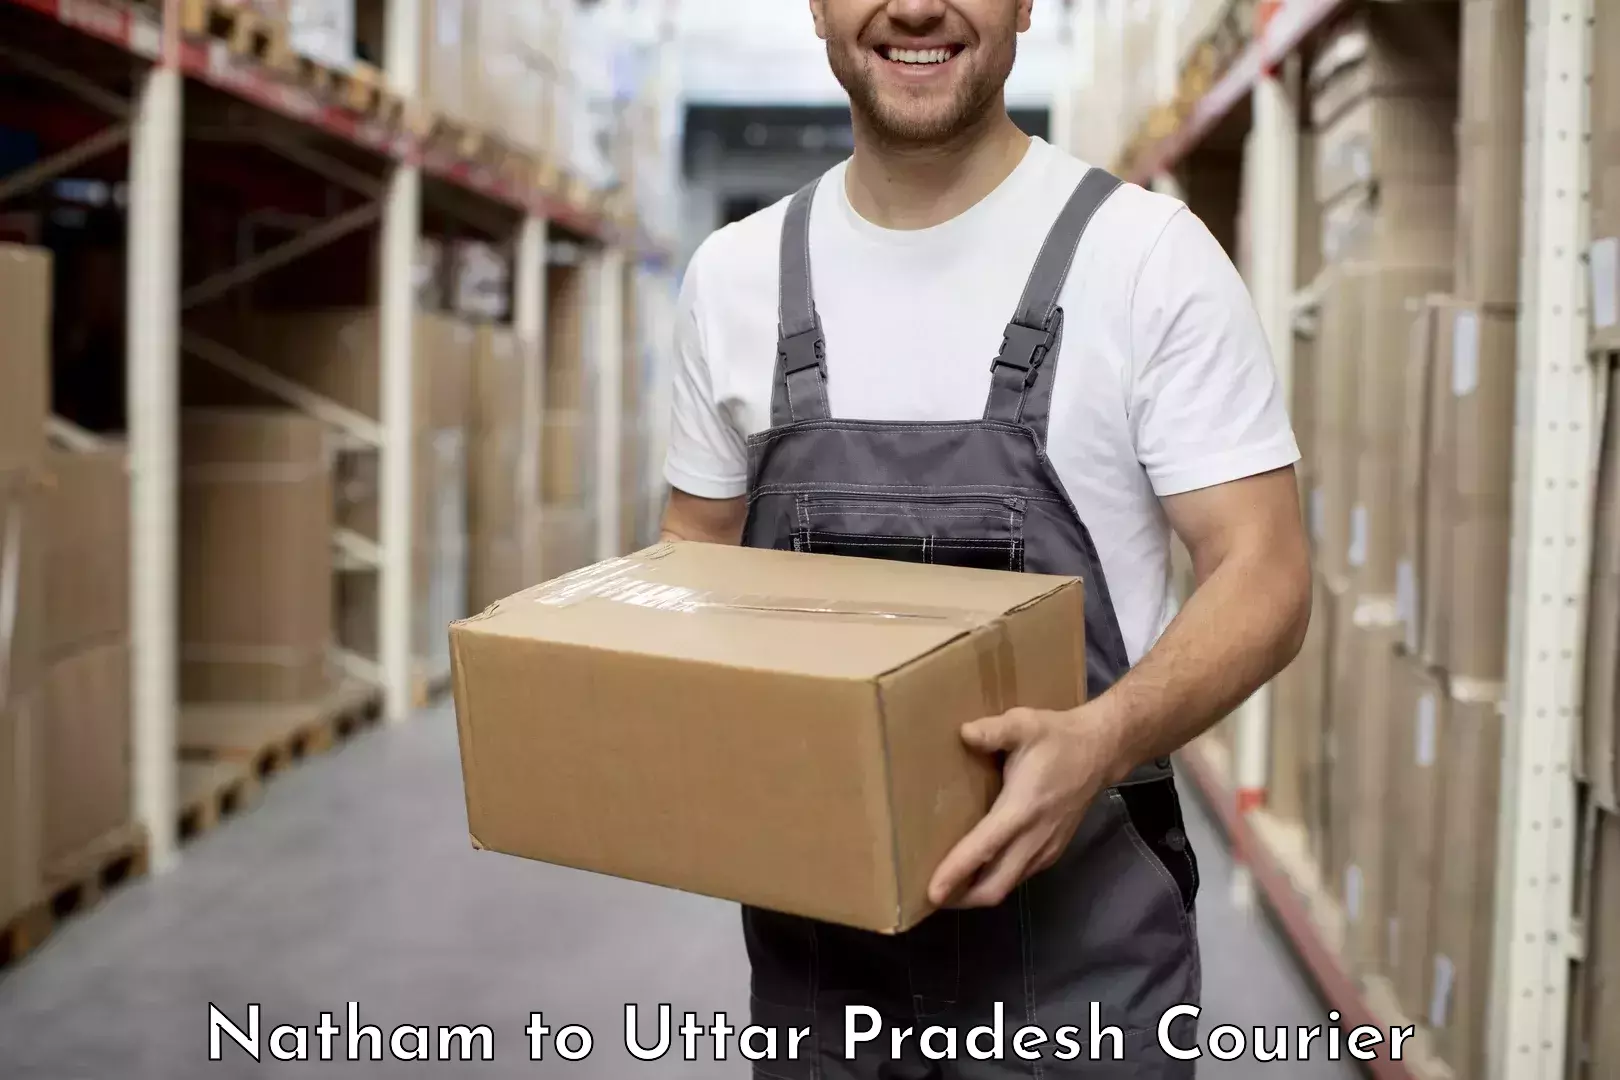 Tracking updates Natham to Uttar Pradesh